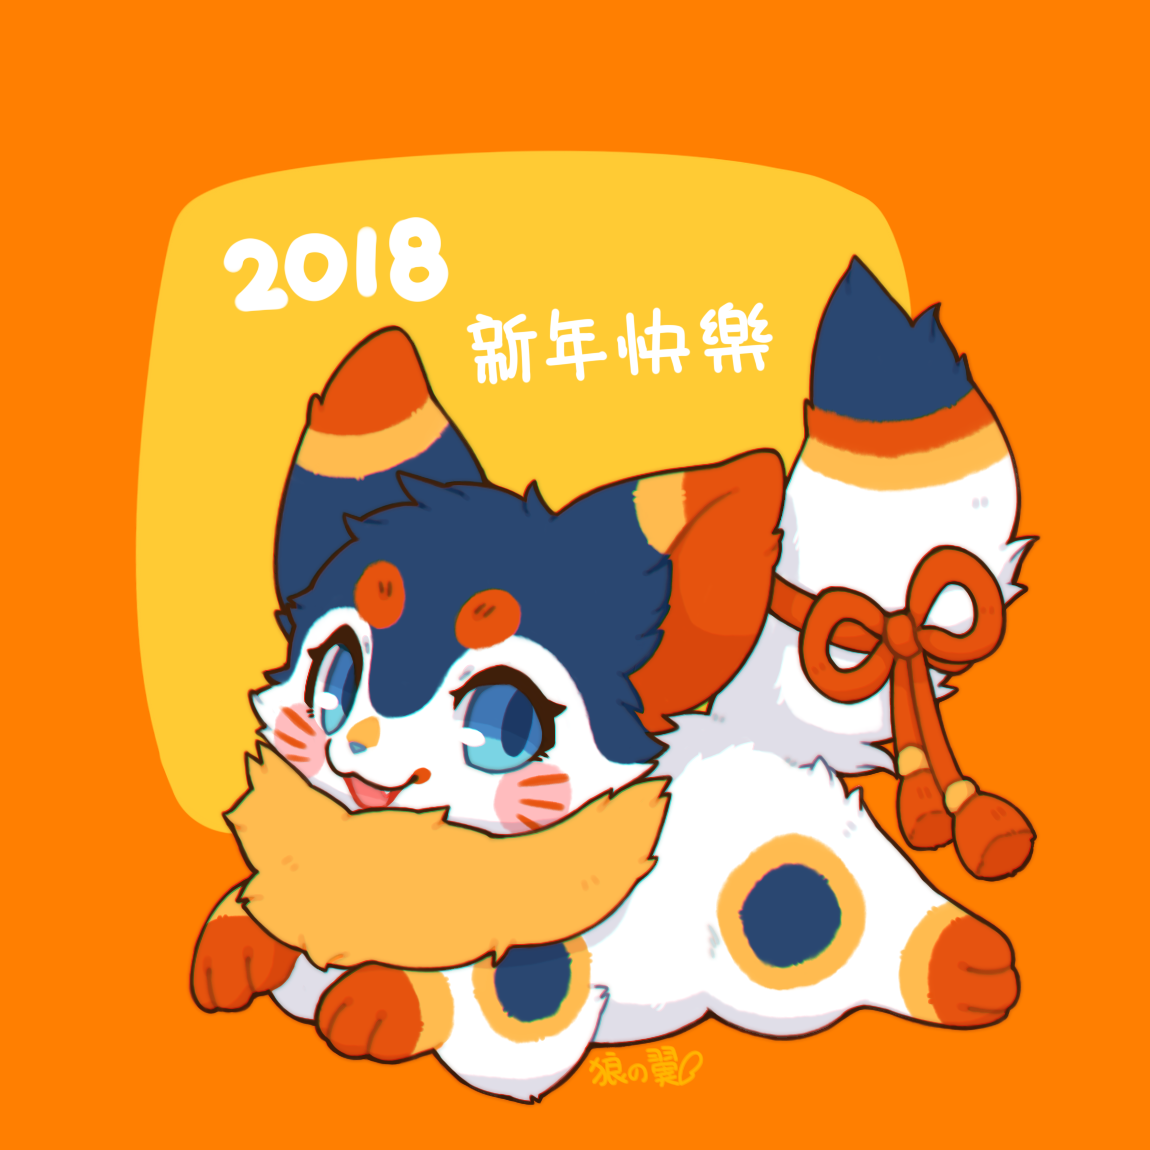 2018 Happy Chinese New Year插画图片壁纸